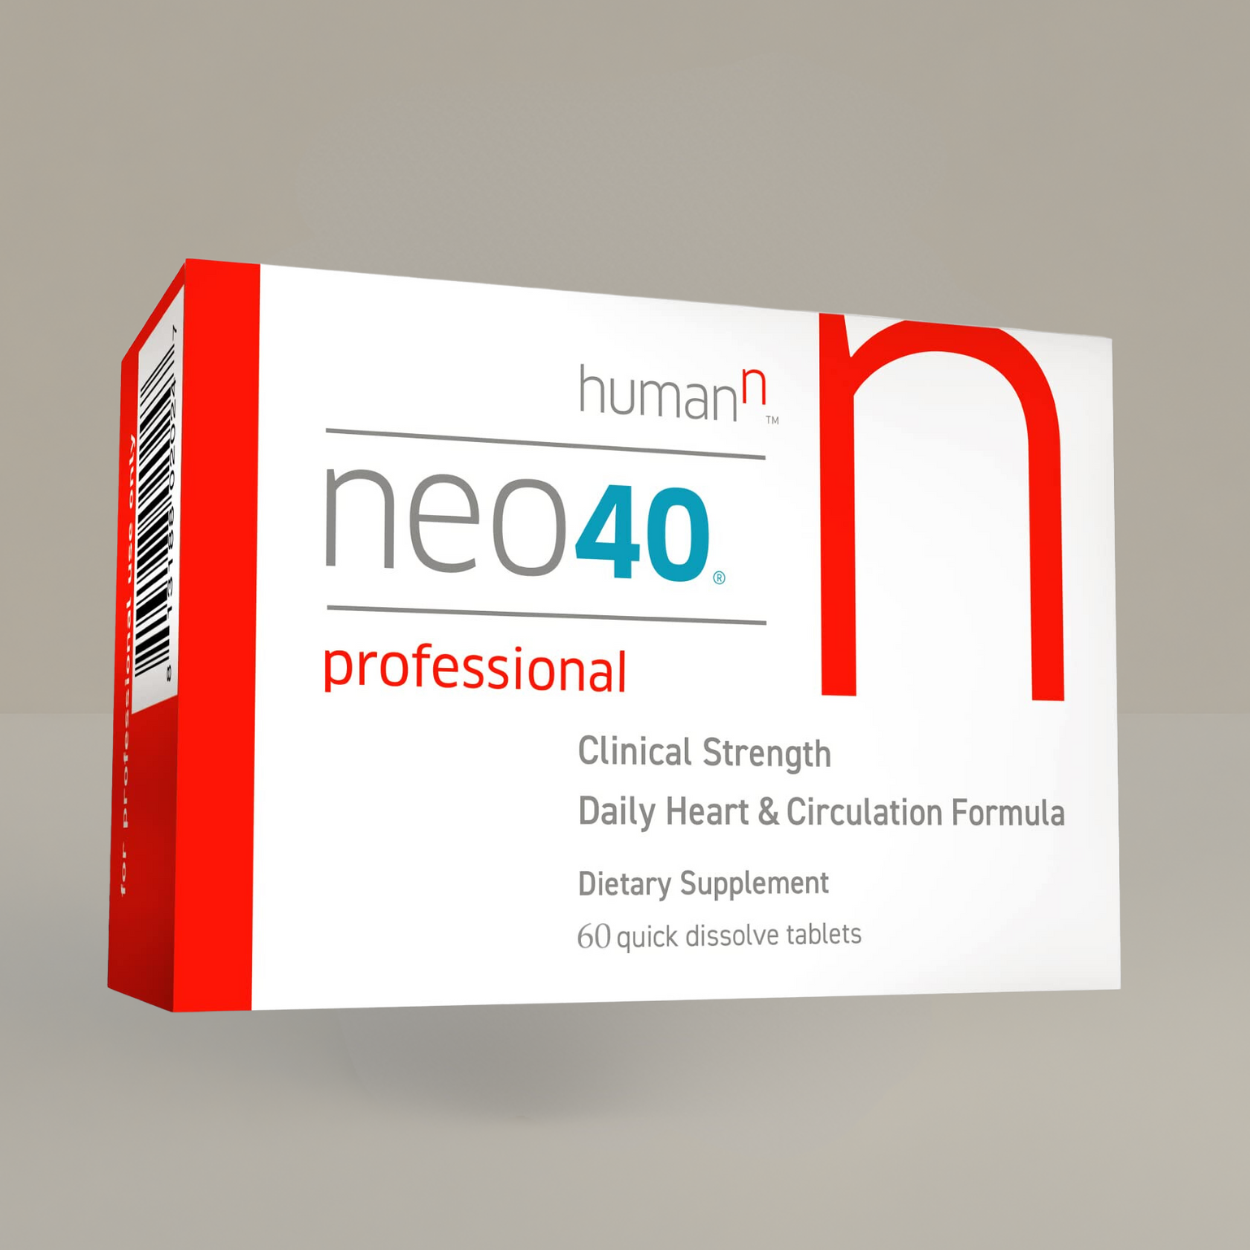 Staff: Neo40 Professional